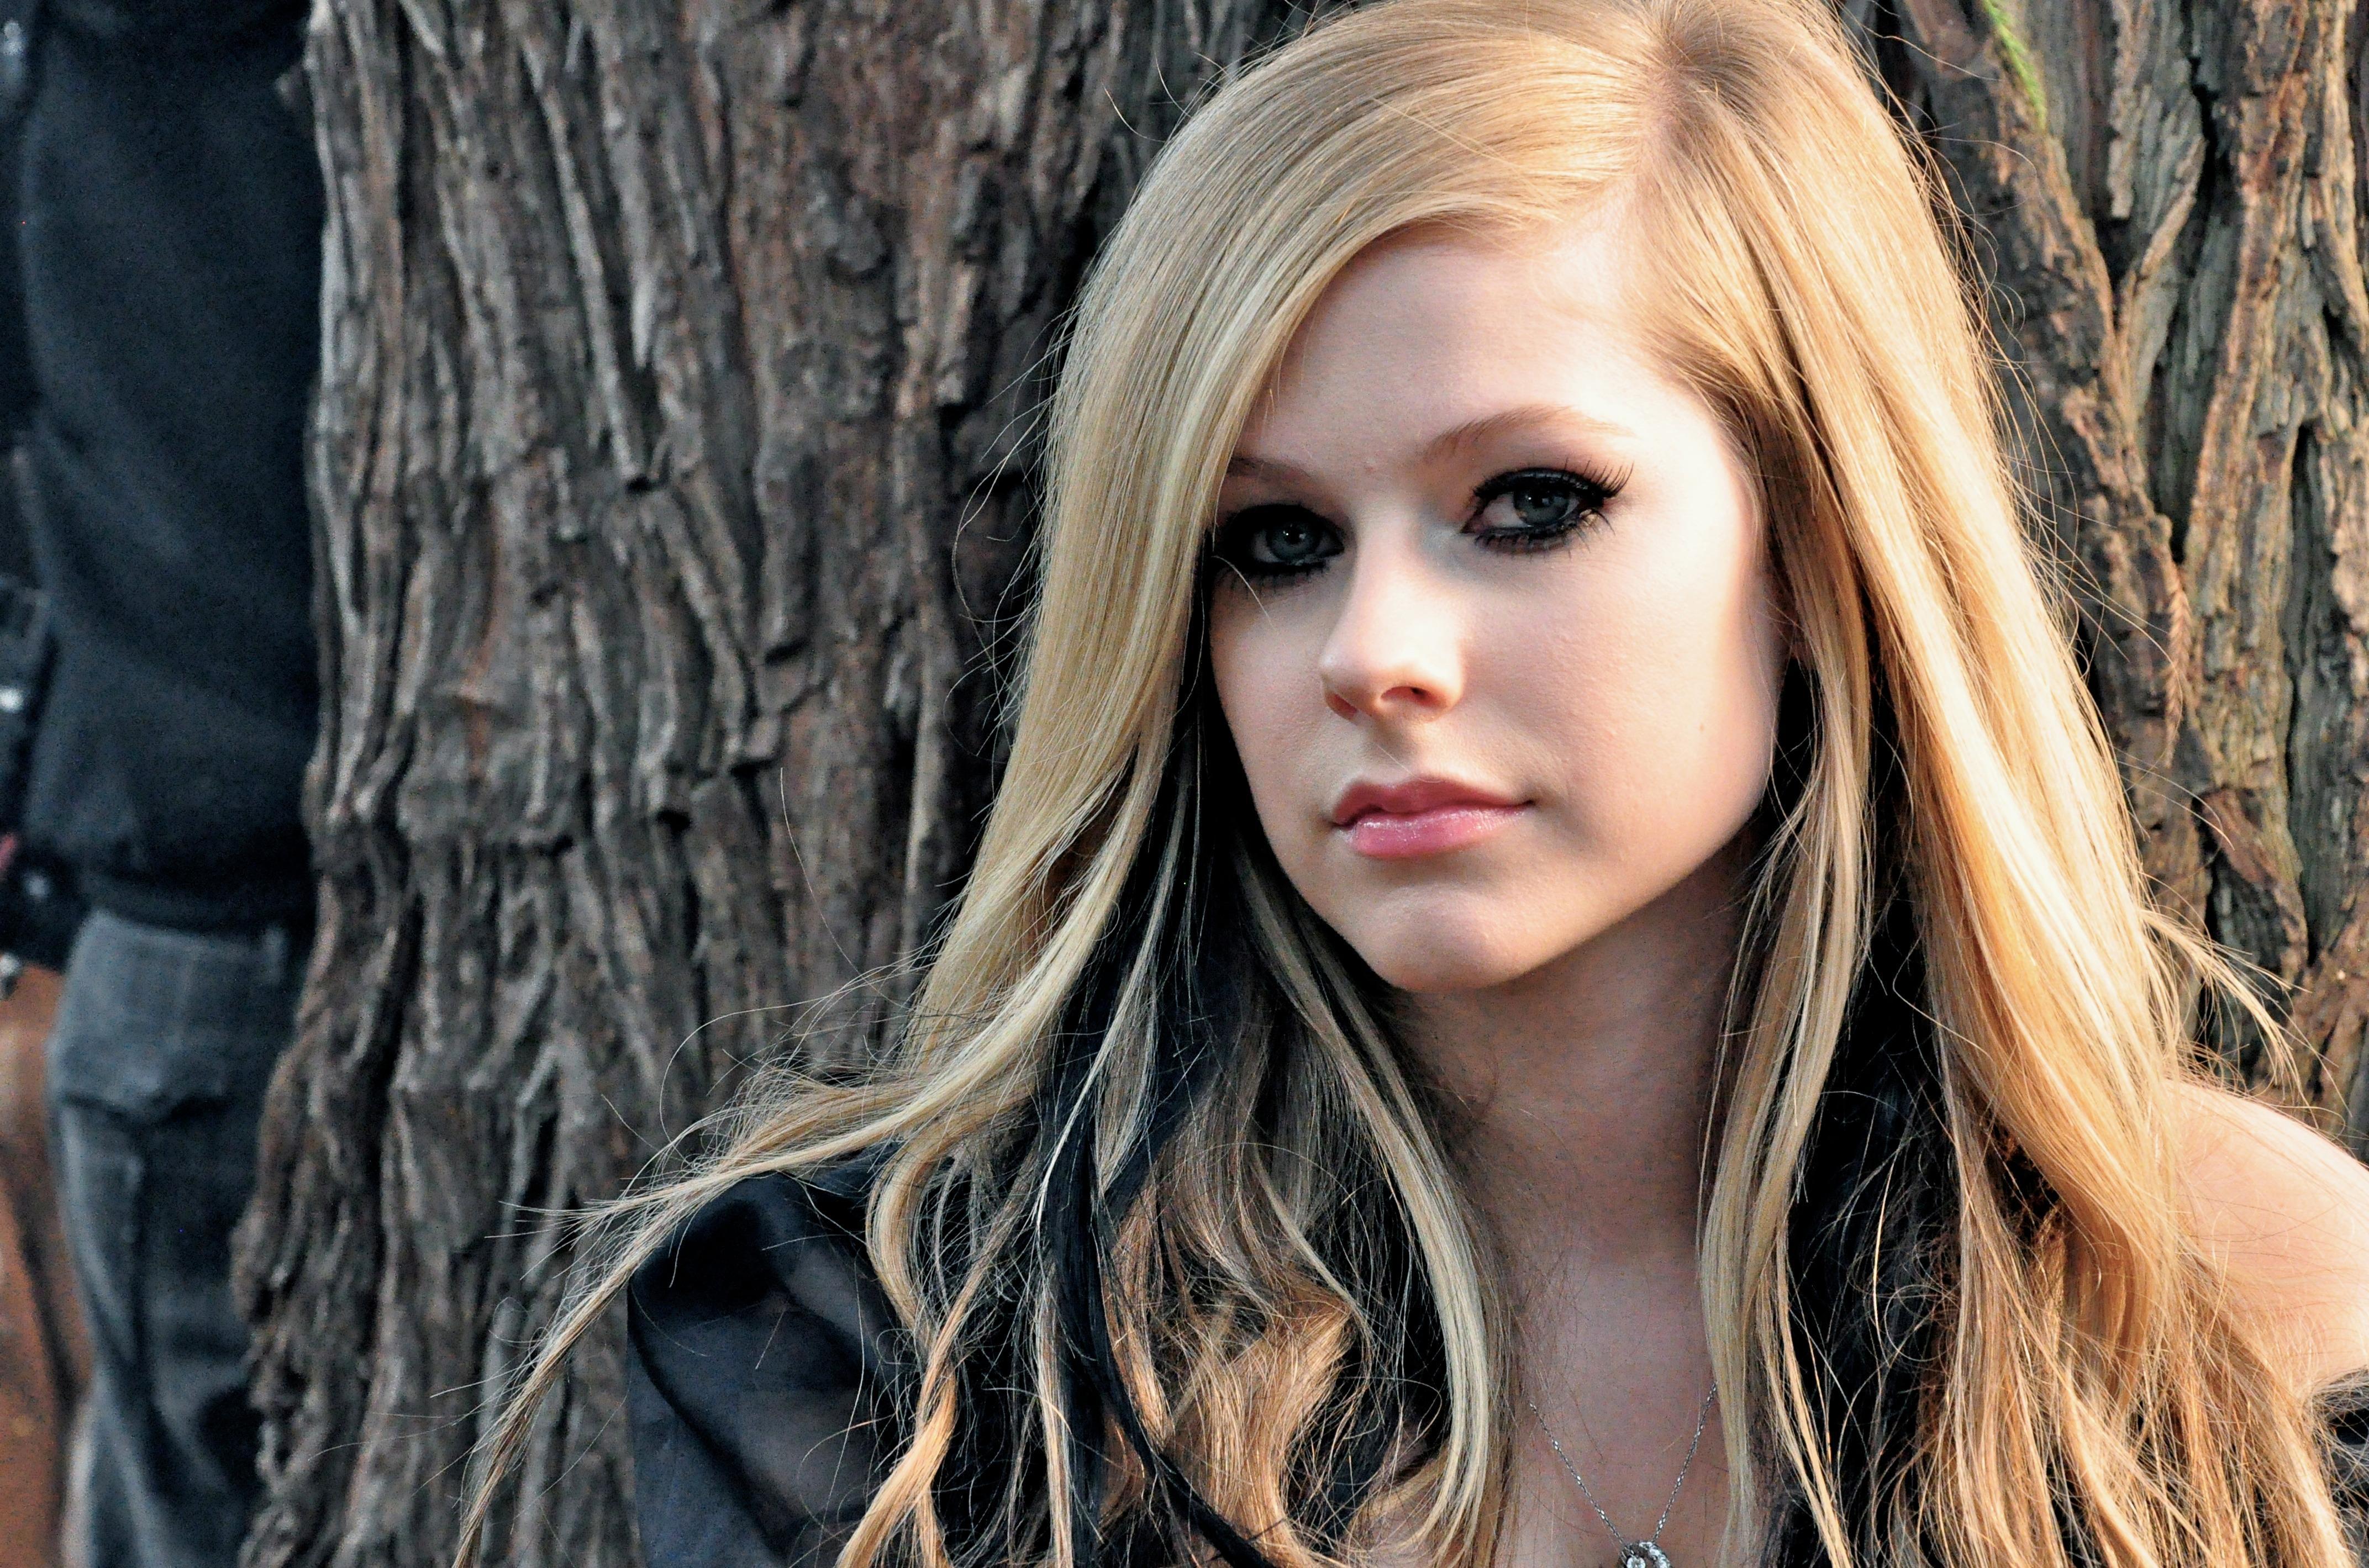 Avril Lavigne - Avril Lavigne Photo (5100519) - Fanpop